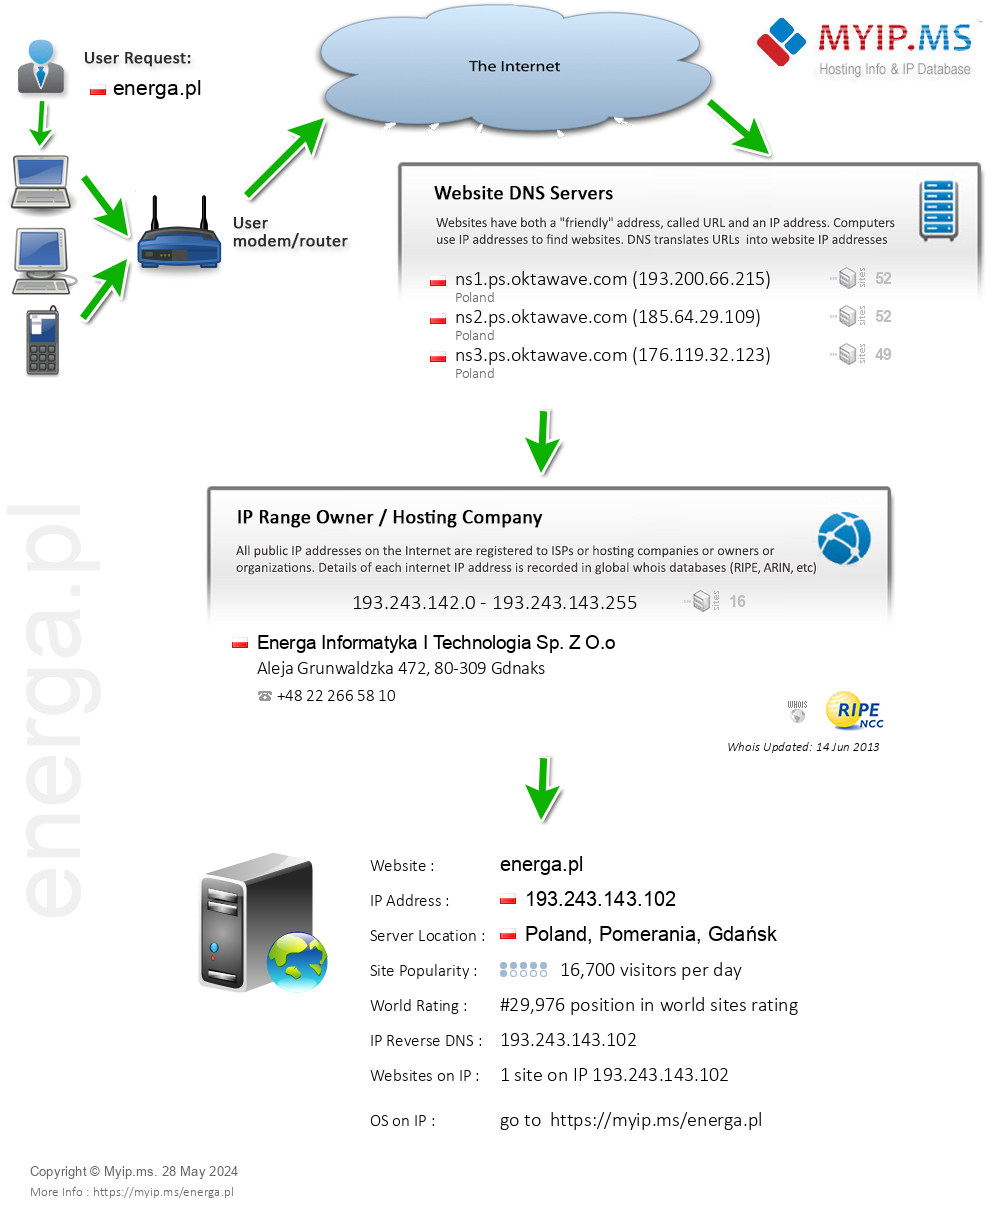 Energa.pl - Website Hosting Visual IP Diagram